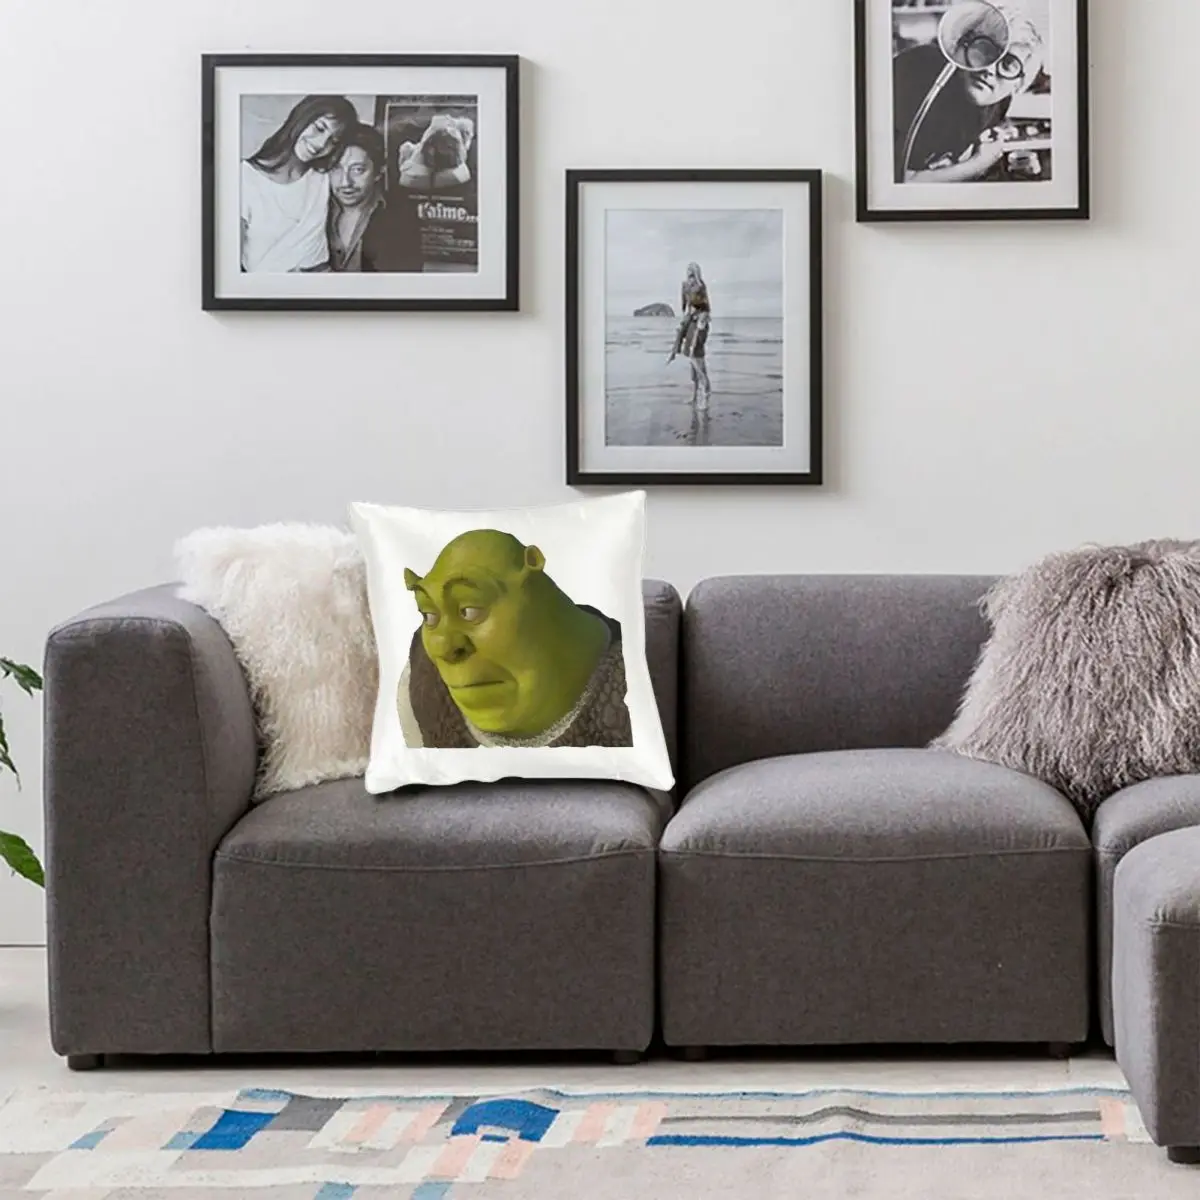 Shrek Meme Pillow Case Printed 35x50 Shrek Shrek Meme Shrek Meme Face -  AliExpress